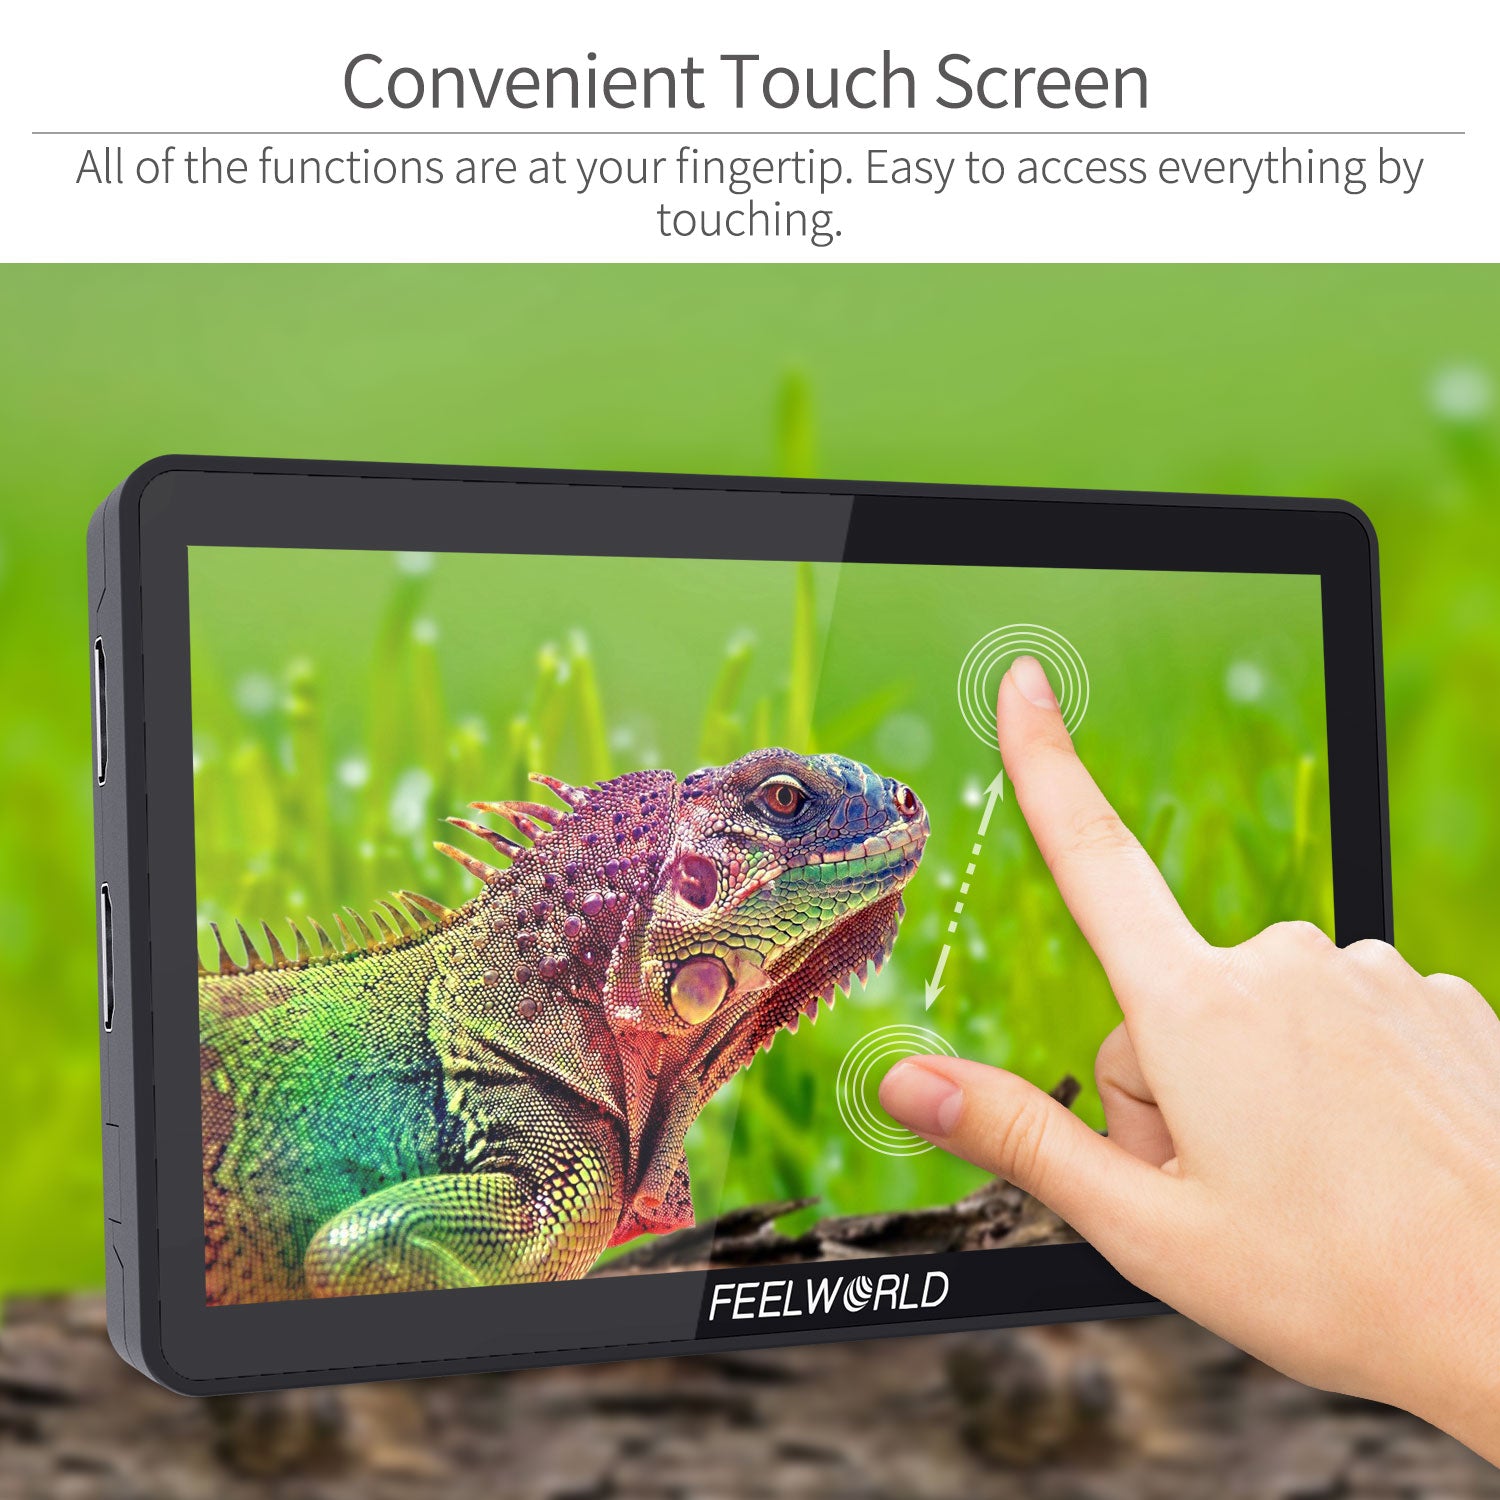 FEELWORLD F6 PLUS 5.5” 3D LUT Touchscreen 4K HDMI Camera Field 